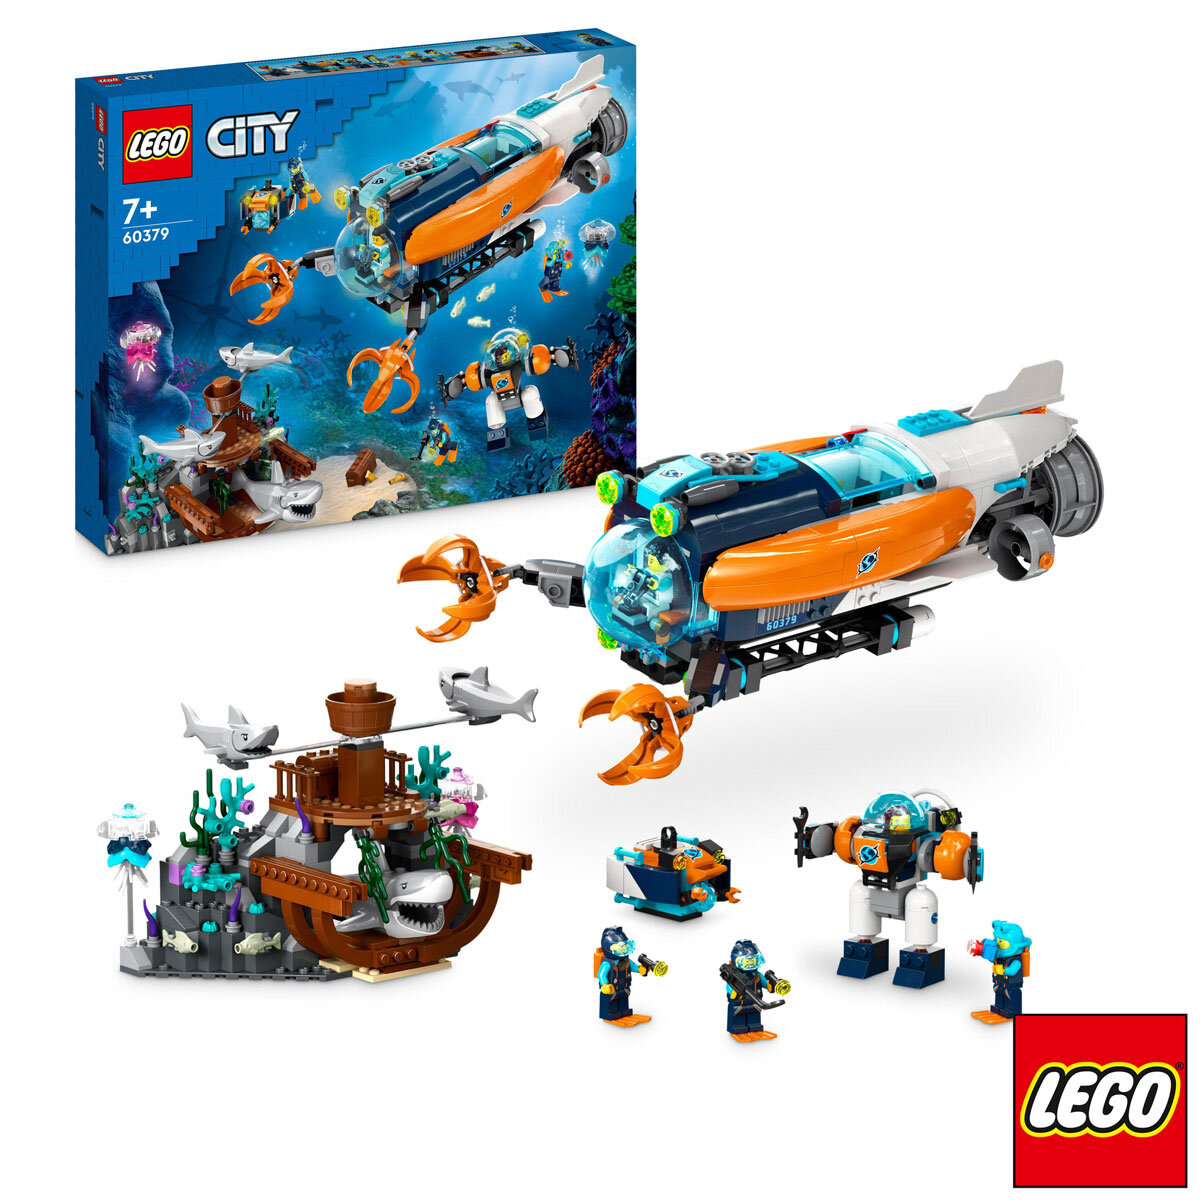 LEGO City Deep Sea Submarine - Model 60379 (7+ Years) | C...